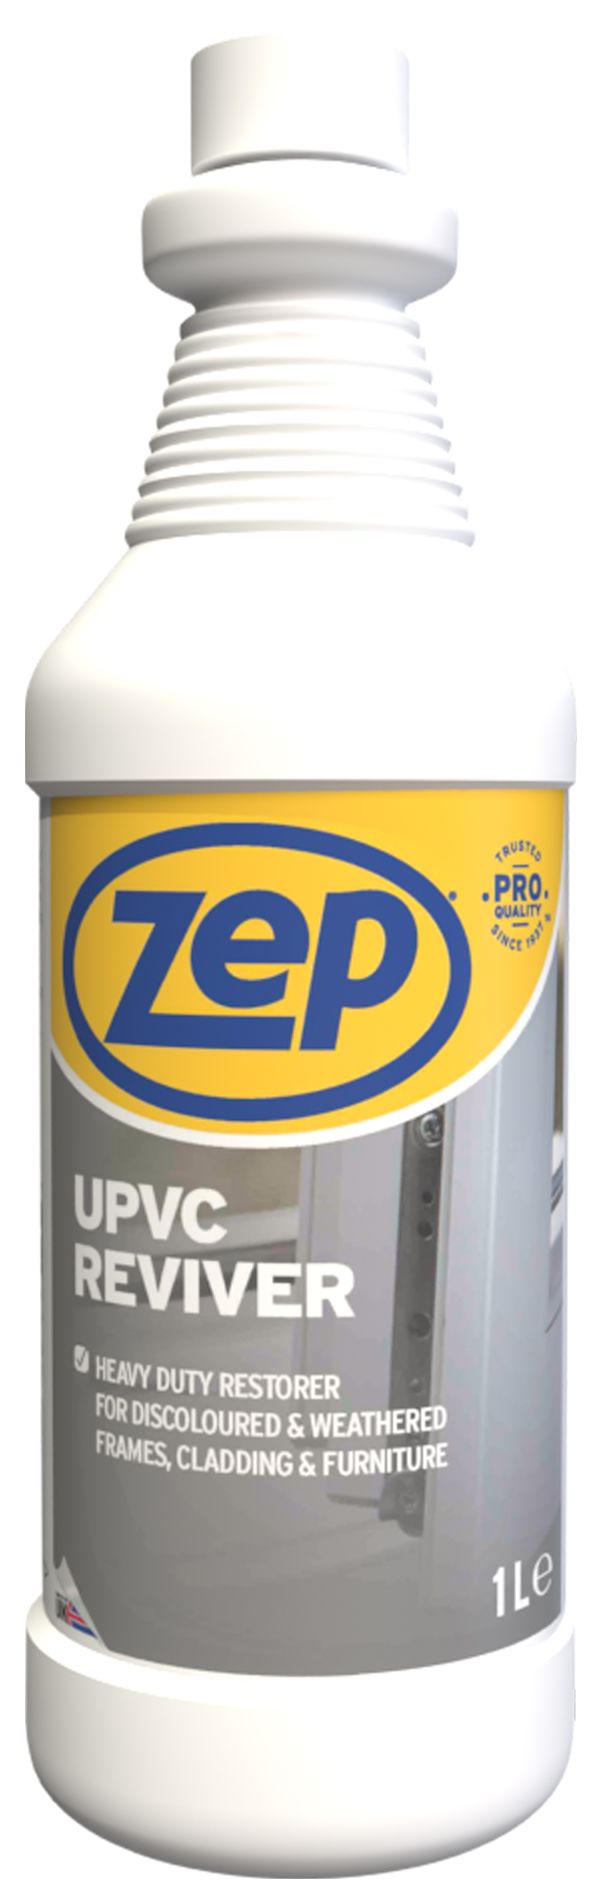 Image of Zep UPVC Reviver 1L